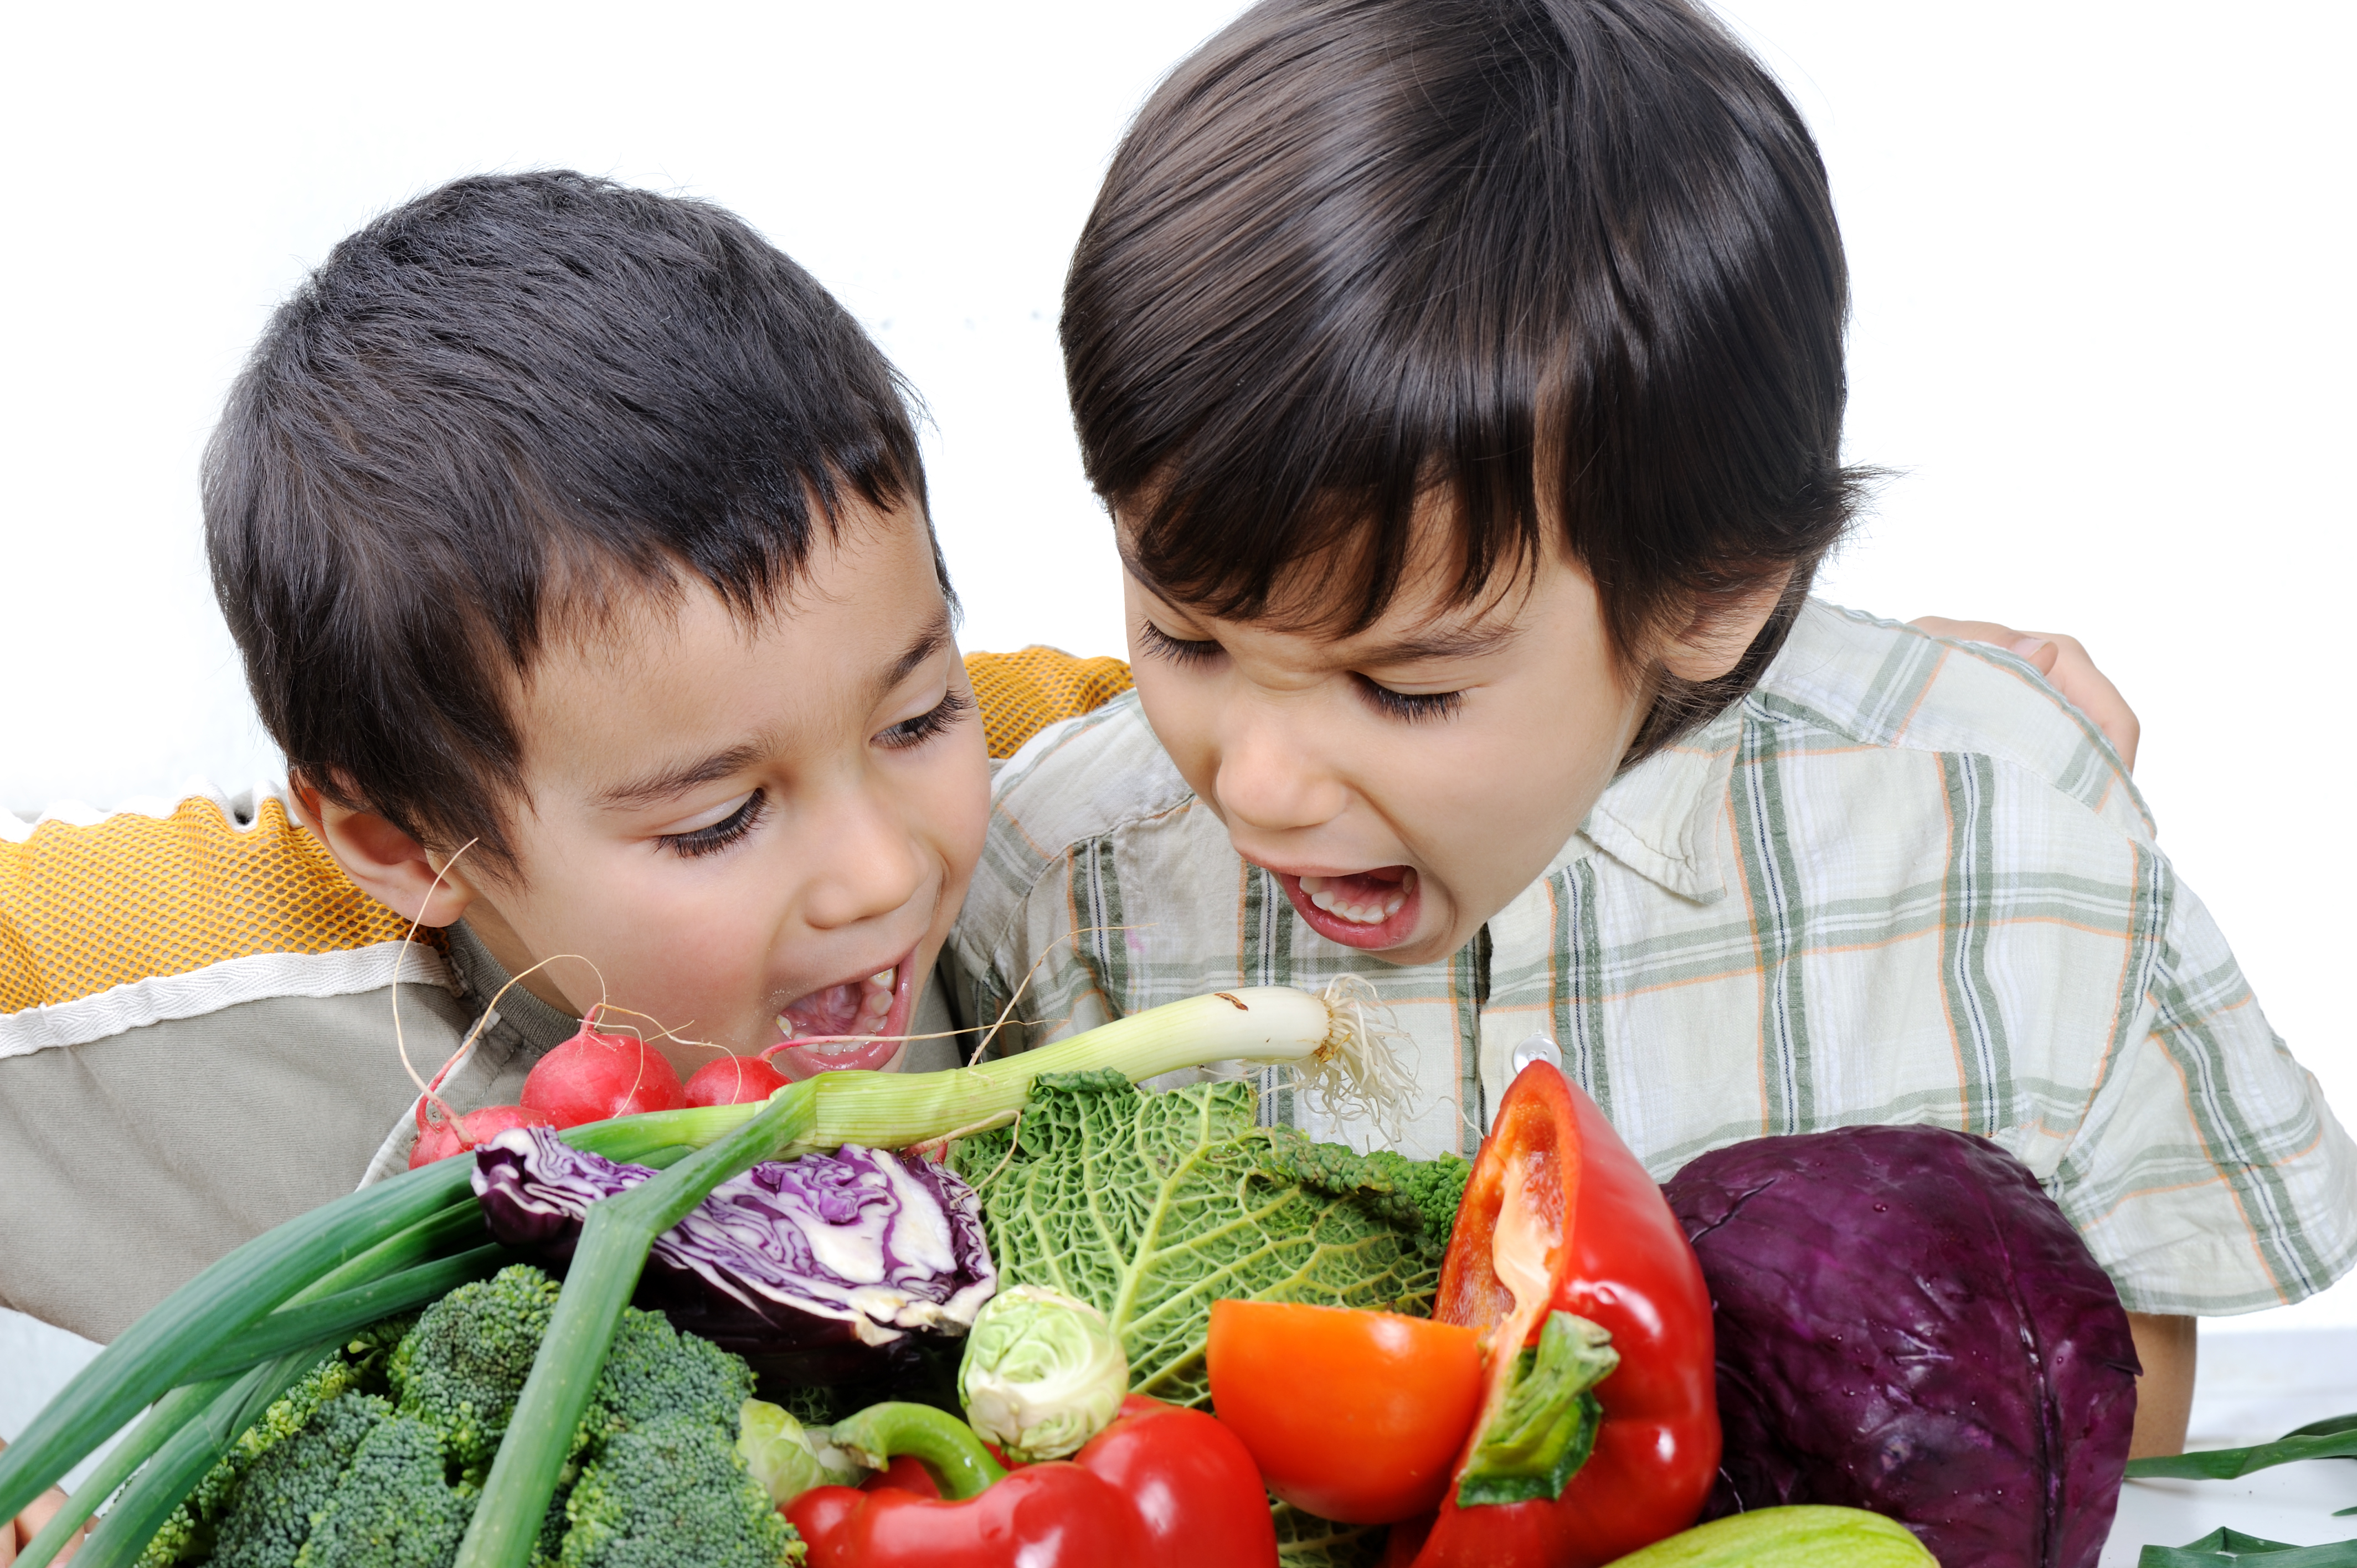 two boys eating veggies